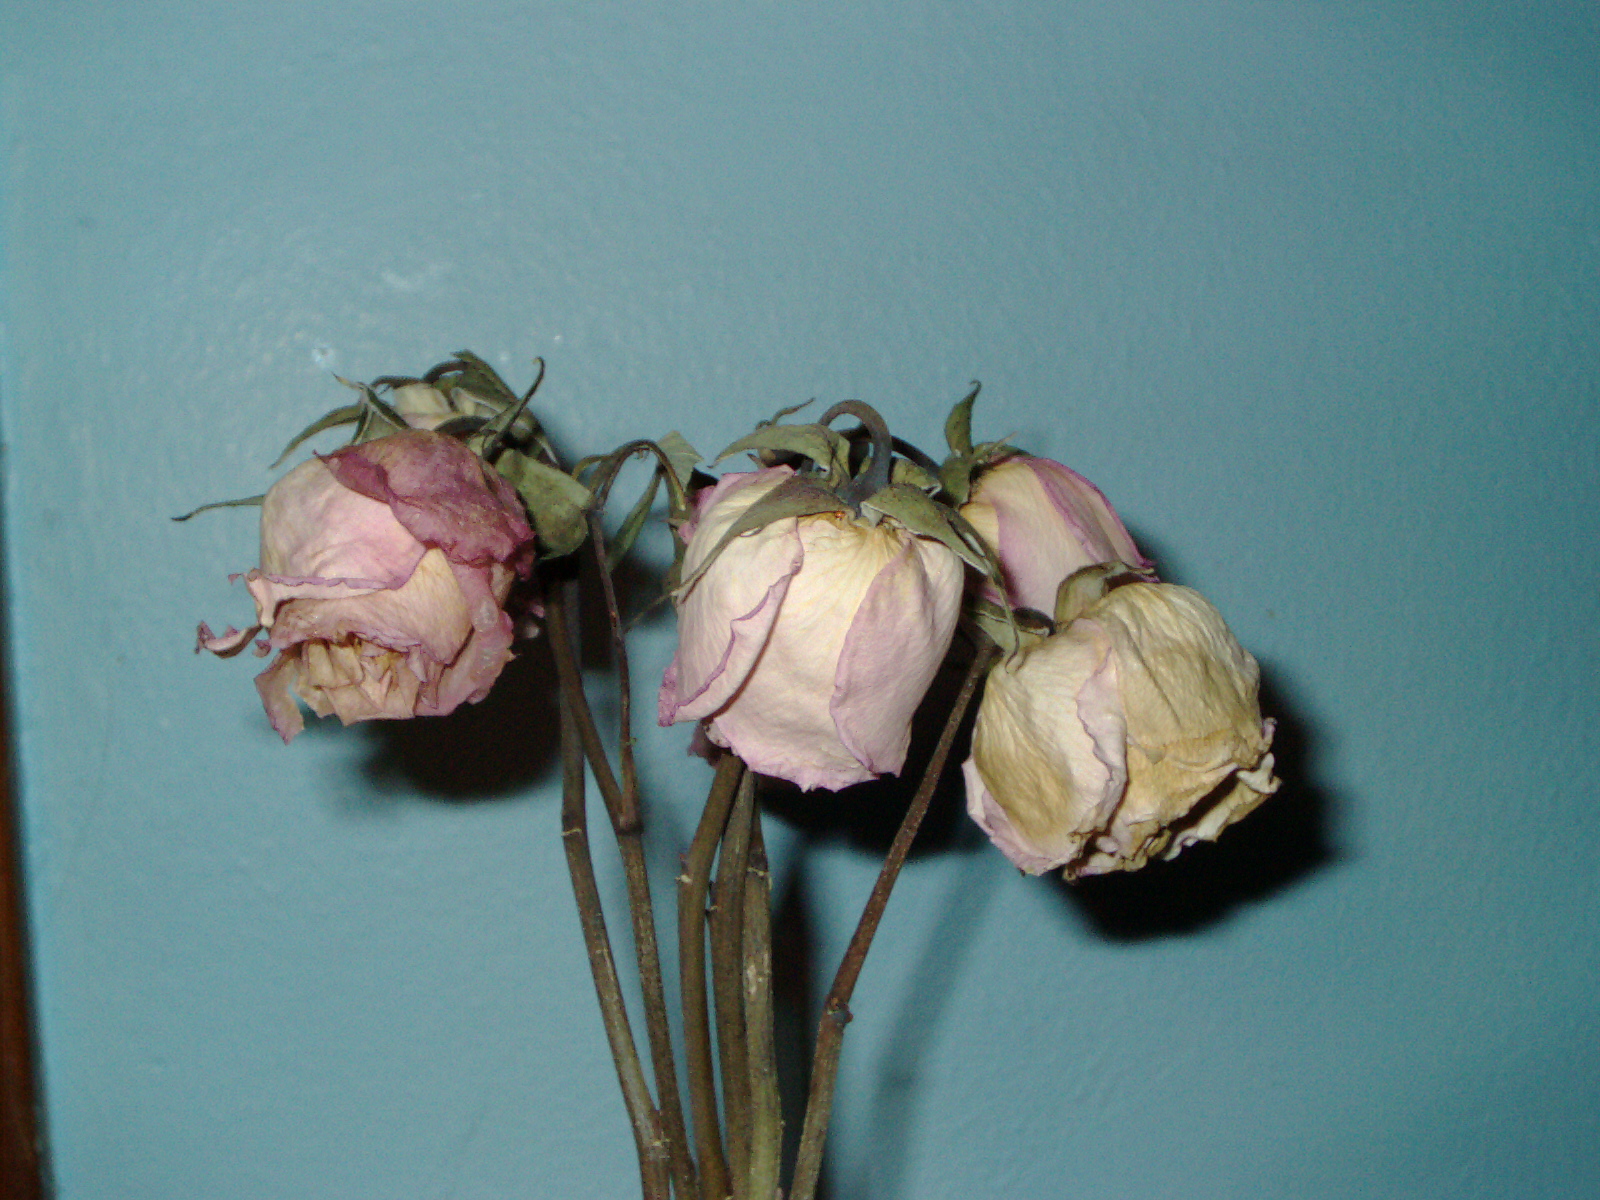 Dead pink roses 5 by starryeyedstock on DeviantArt